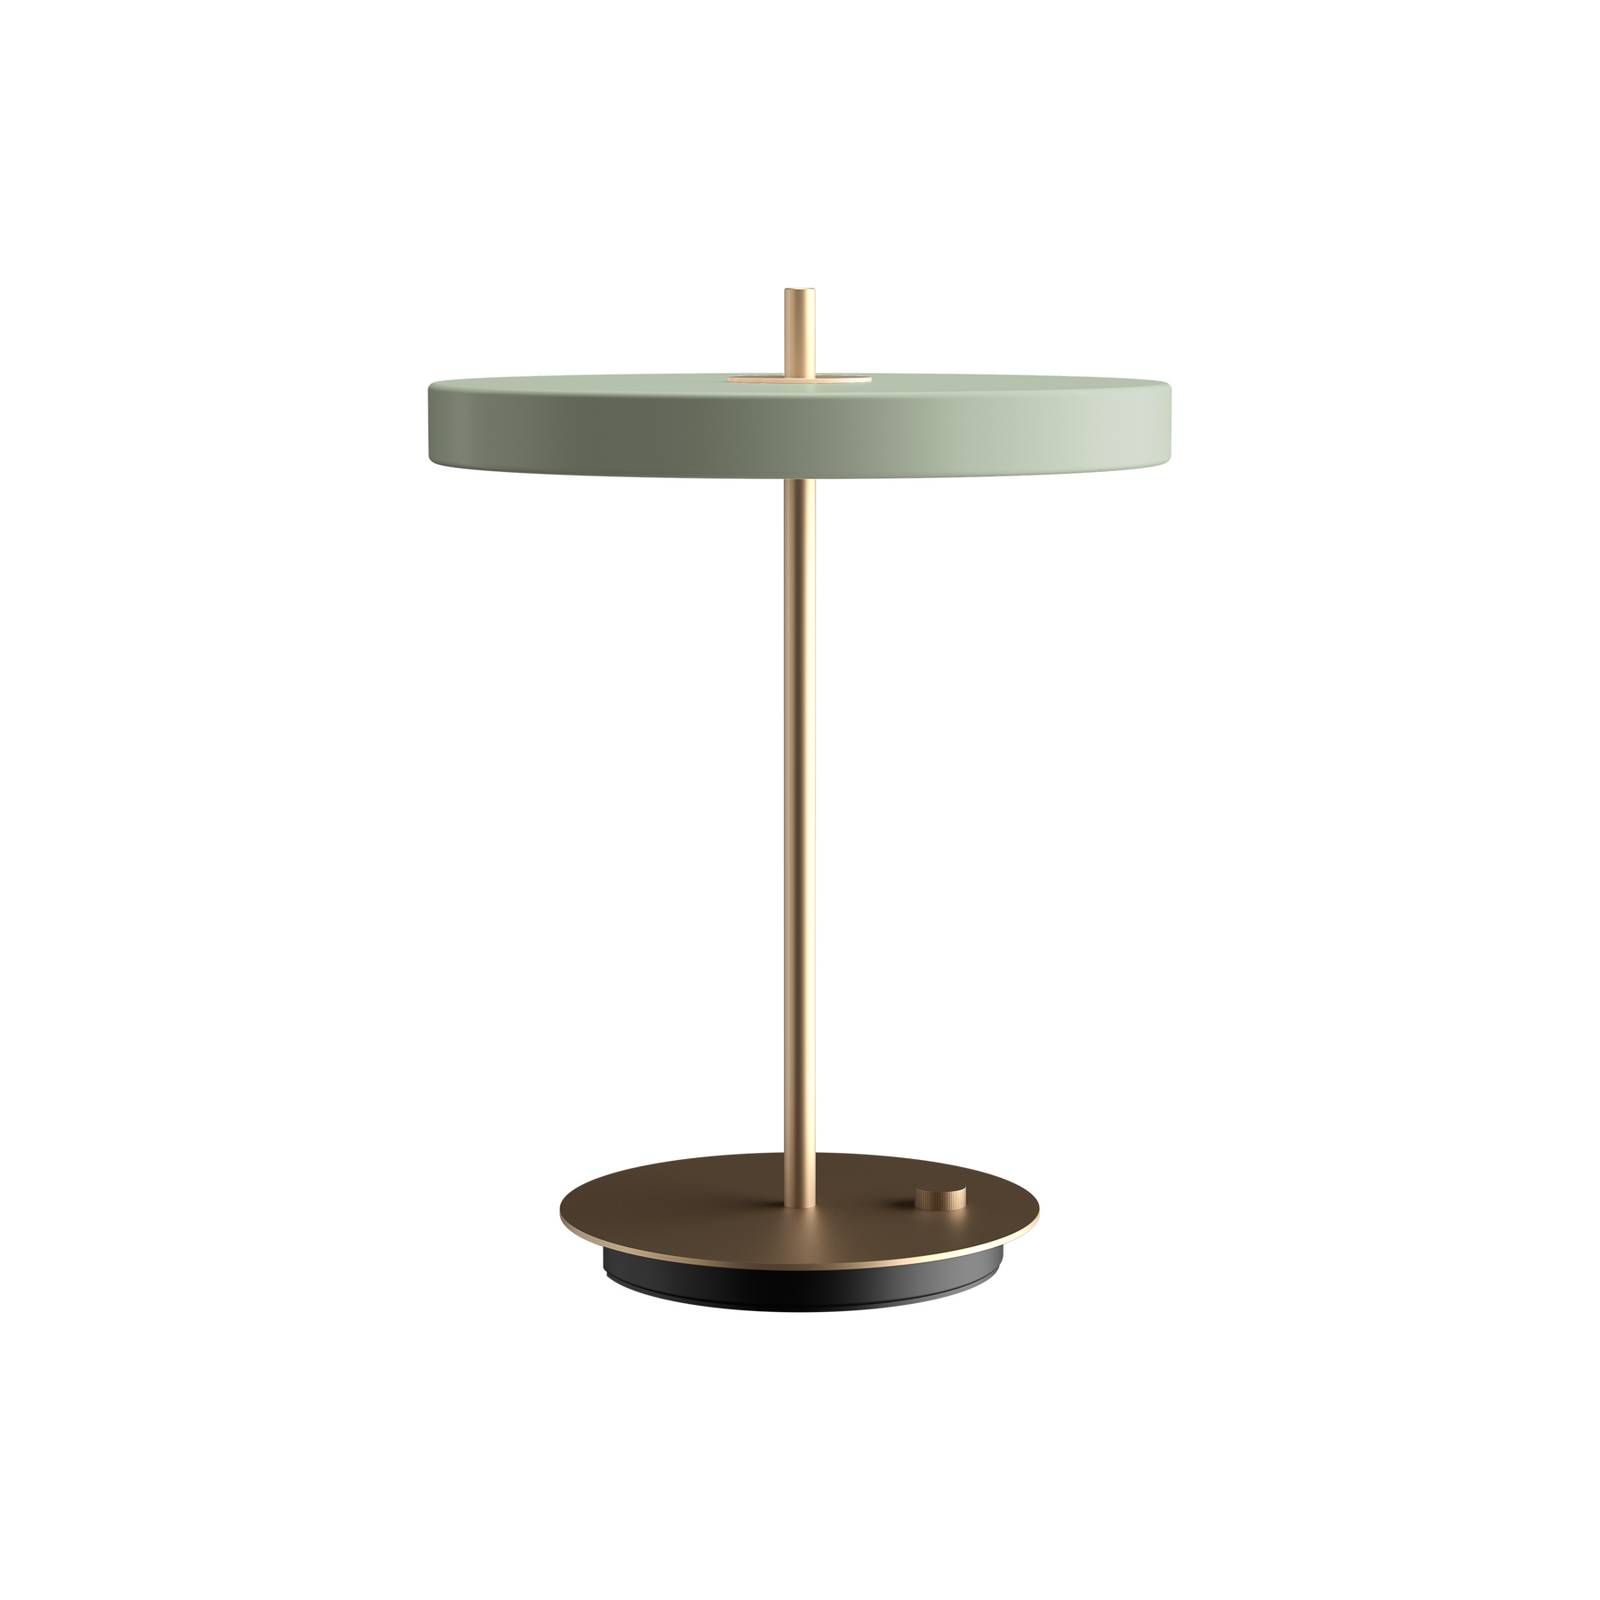 UMAGE stolová LED lampa Asteria Table USB zelená, Obývacia izba / jedáleň, plast, oceľ, hliník, akryl, 13W, K: 41.5cm